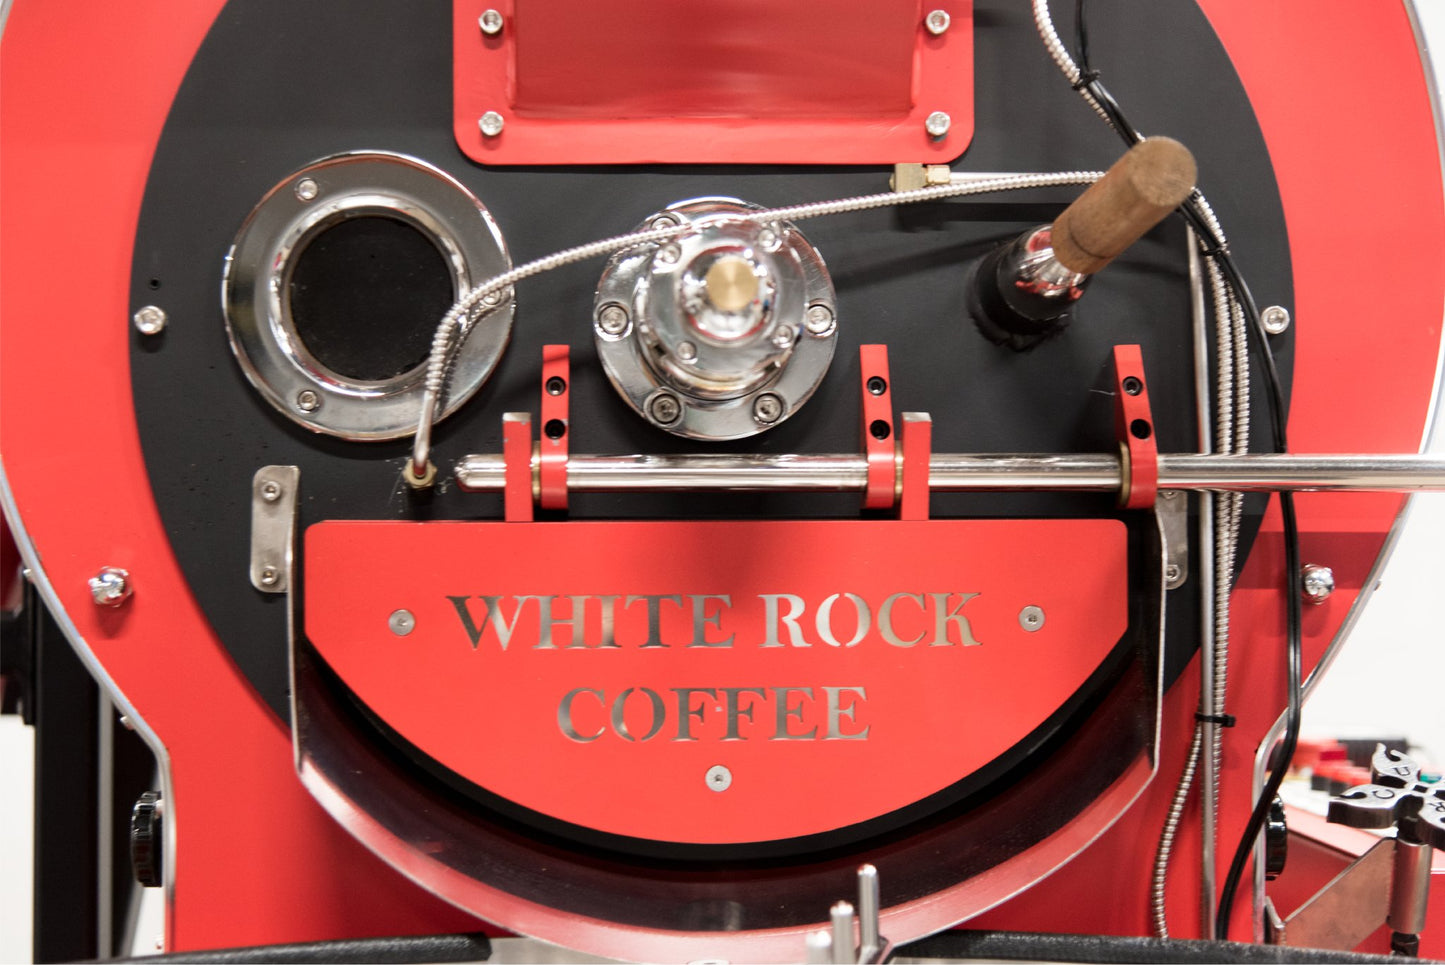 Roasting Professional Level - SCA Certificate Program - White Rock Coffee